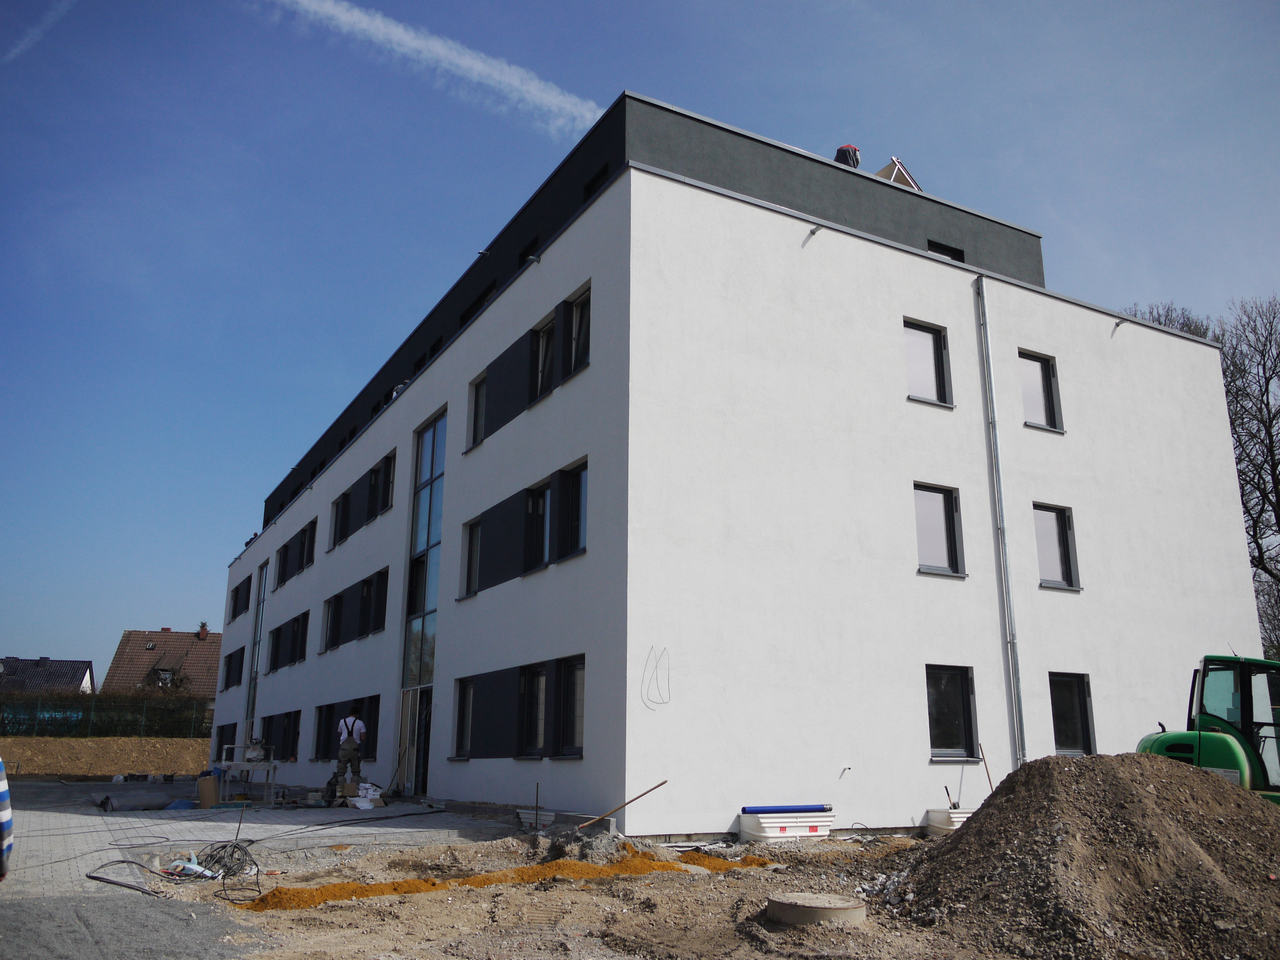 Wärmepumpe / PV-Anlage Wohnkomplex in Sprockhövel